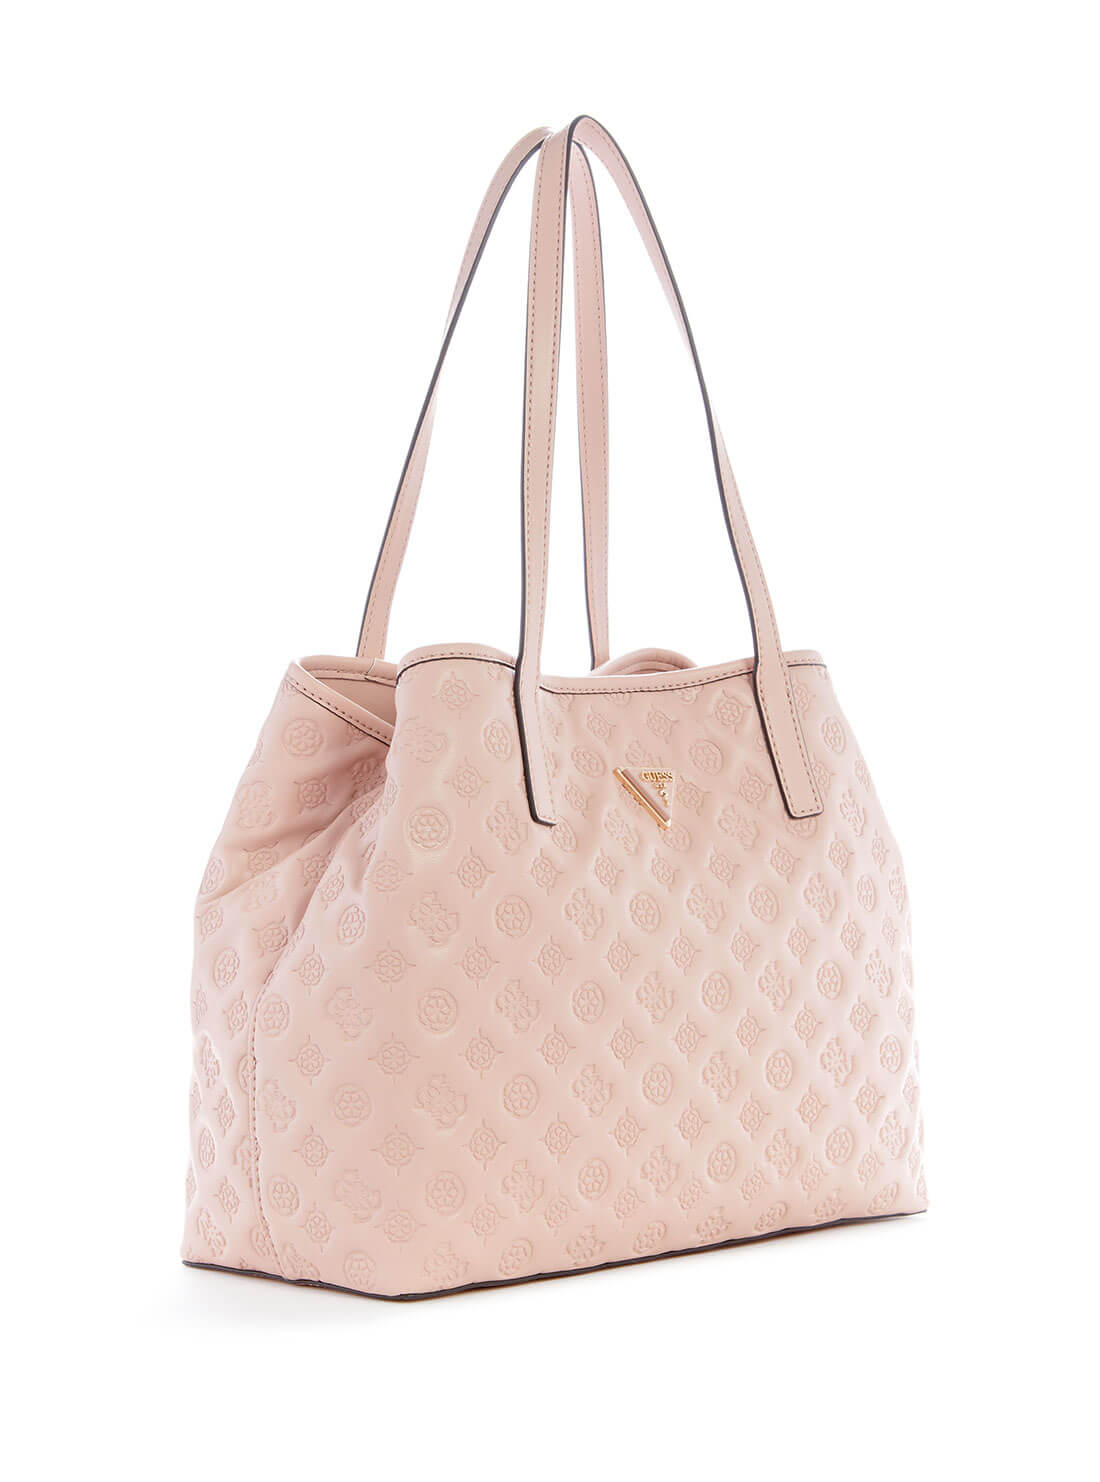 Rose La Femme Vikky Tote Bag | GUESS Women's Handbags | side view